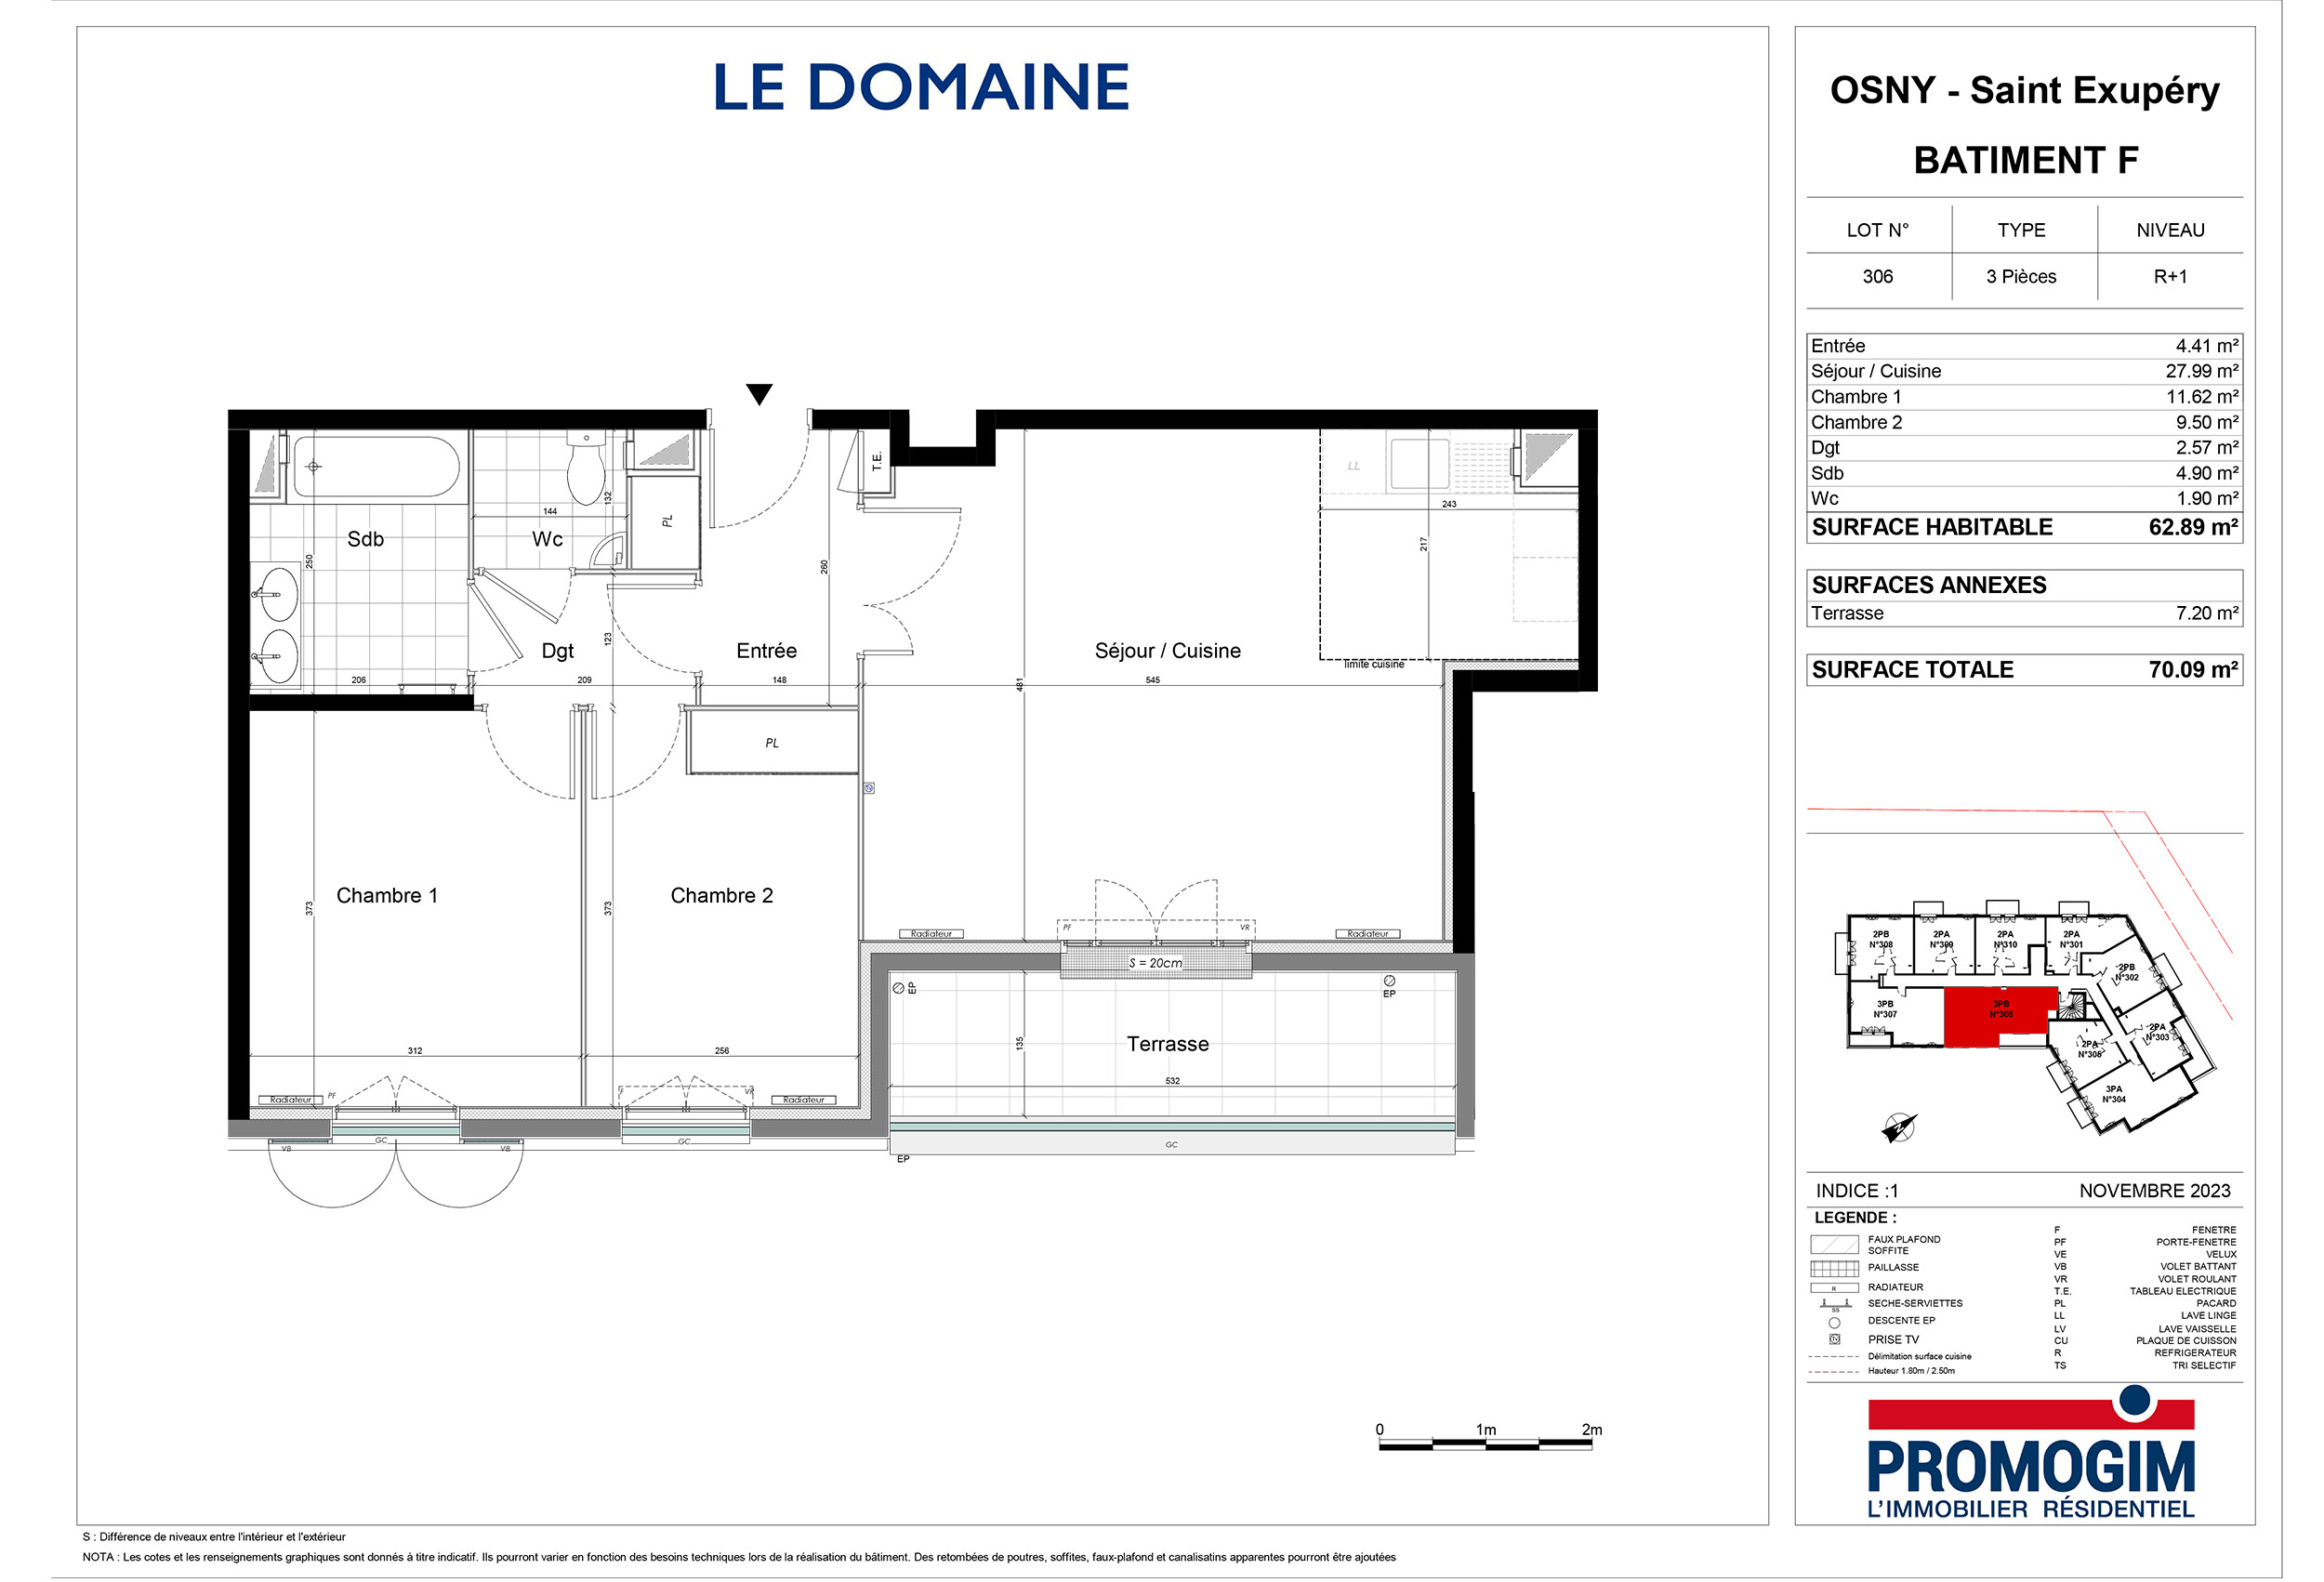 Osny - Le Domaine - Lot f306